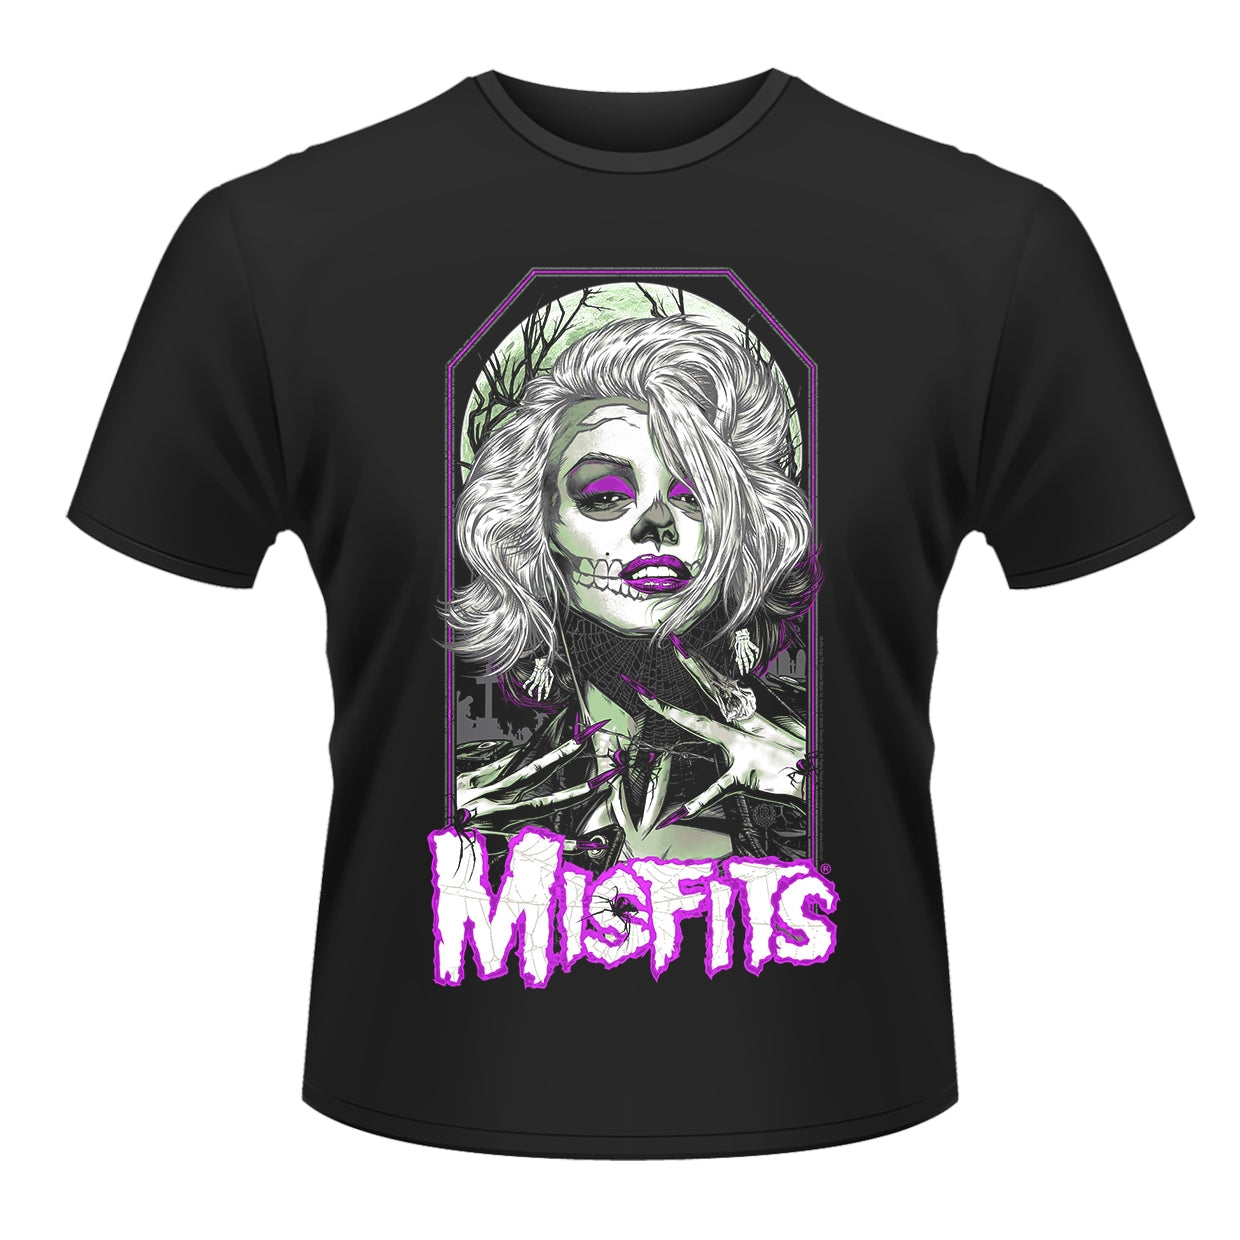 Misfits - Original Misfit - T-Shirt Unisex Officiell Merch